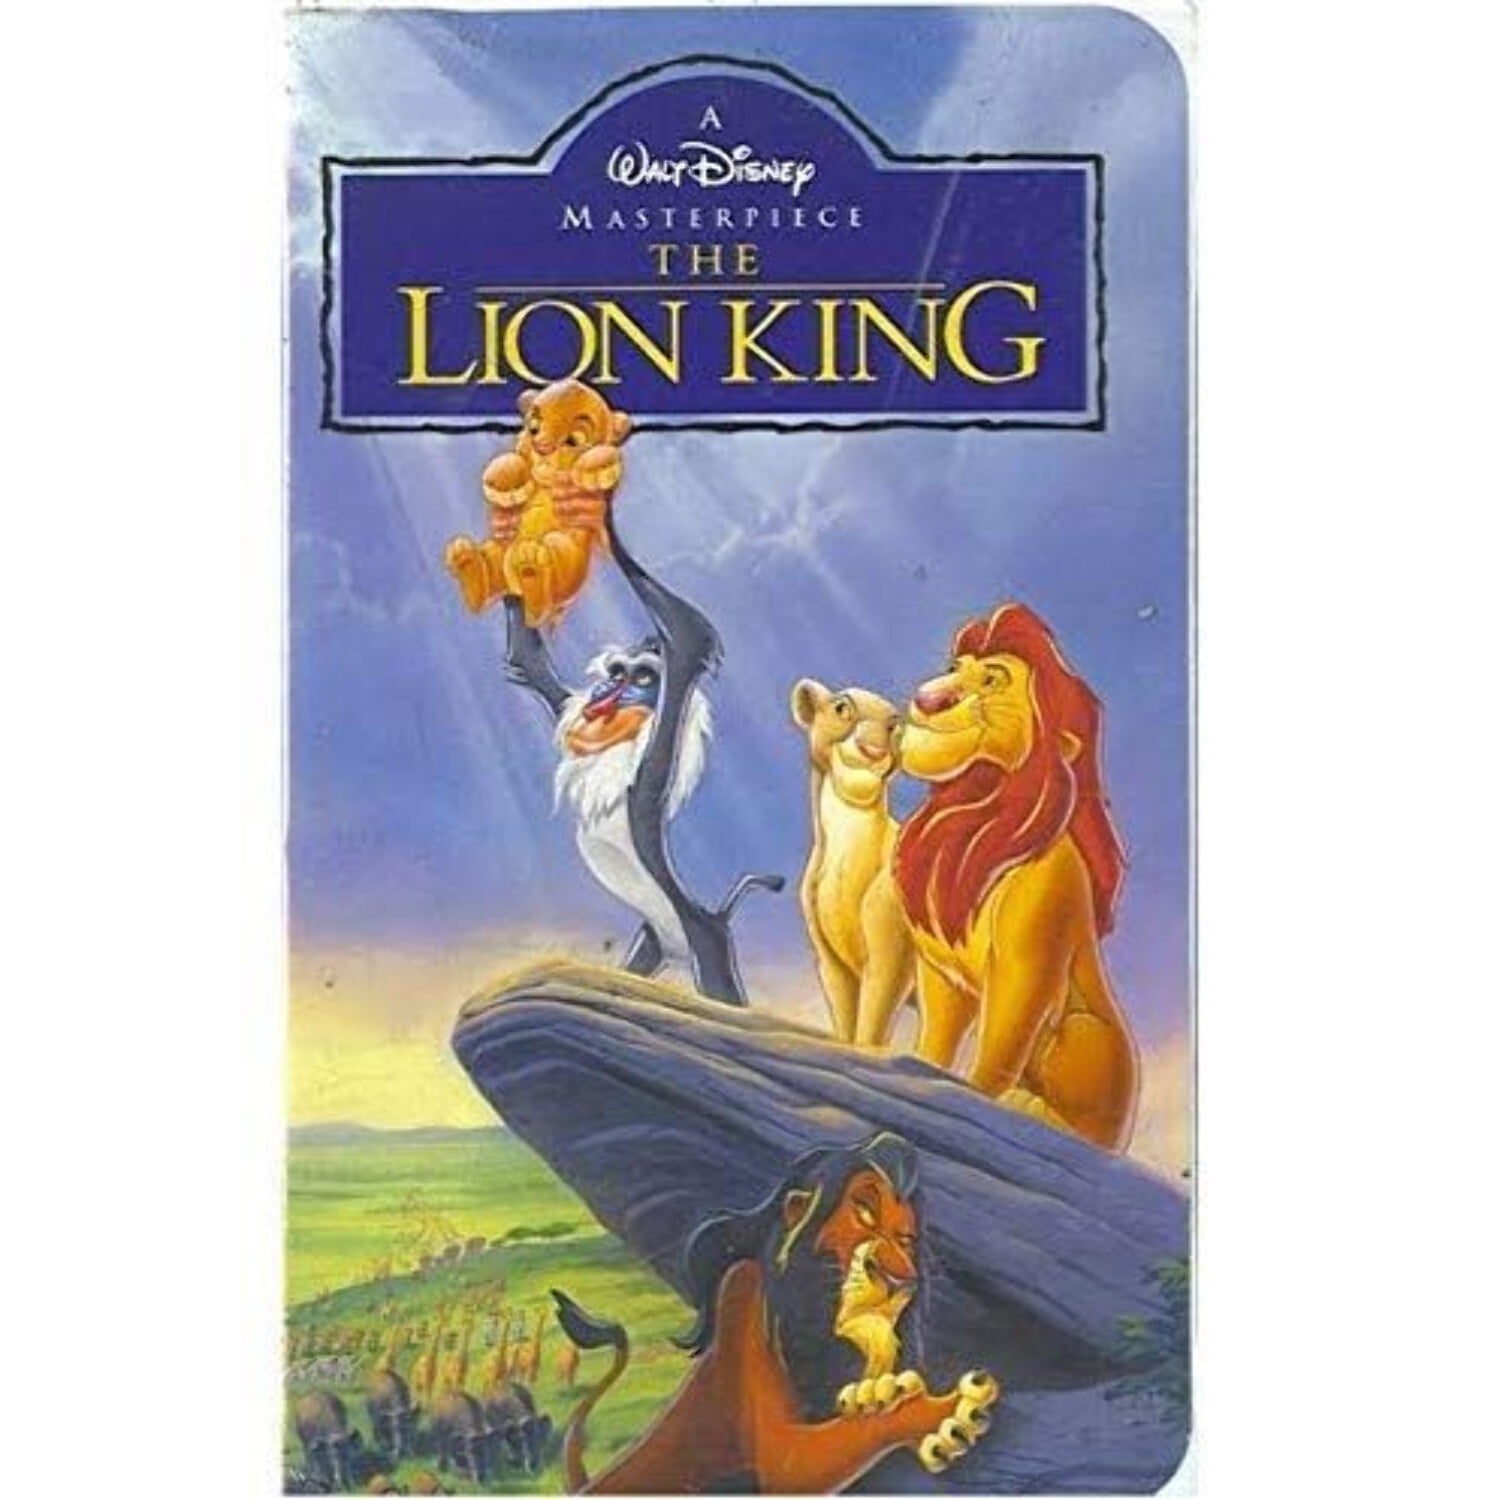 A Walt Disney Masterpiece-The Lion King VHS Tape - Walmart.com